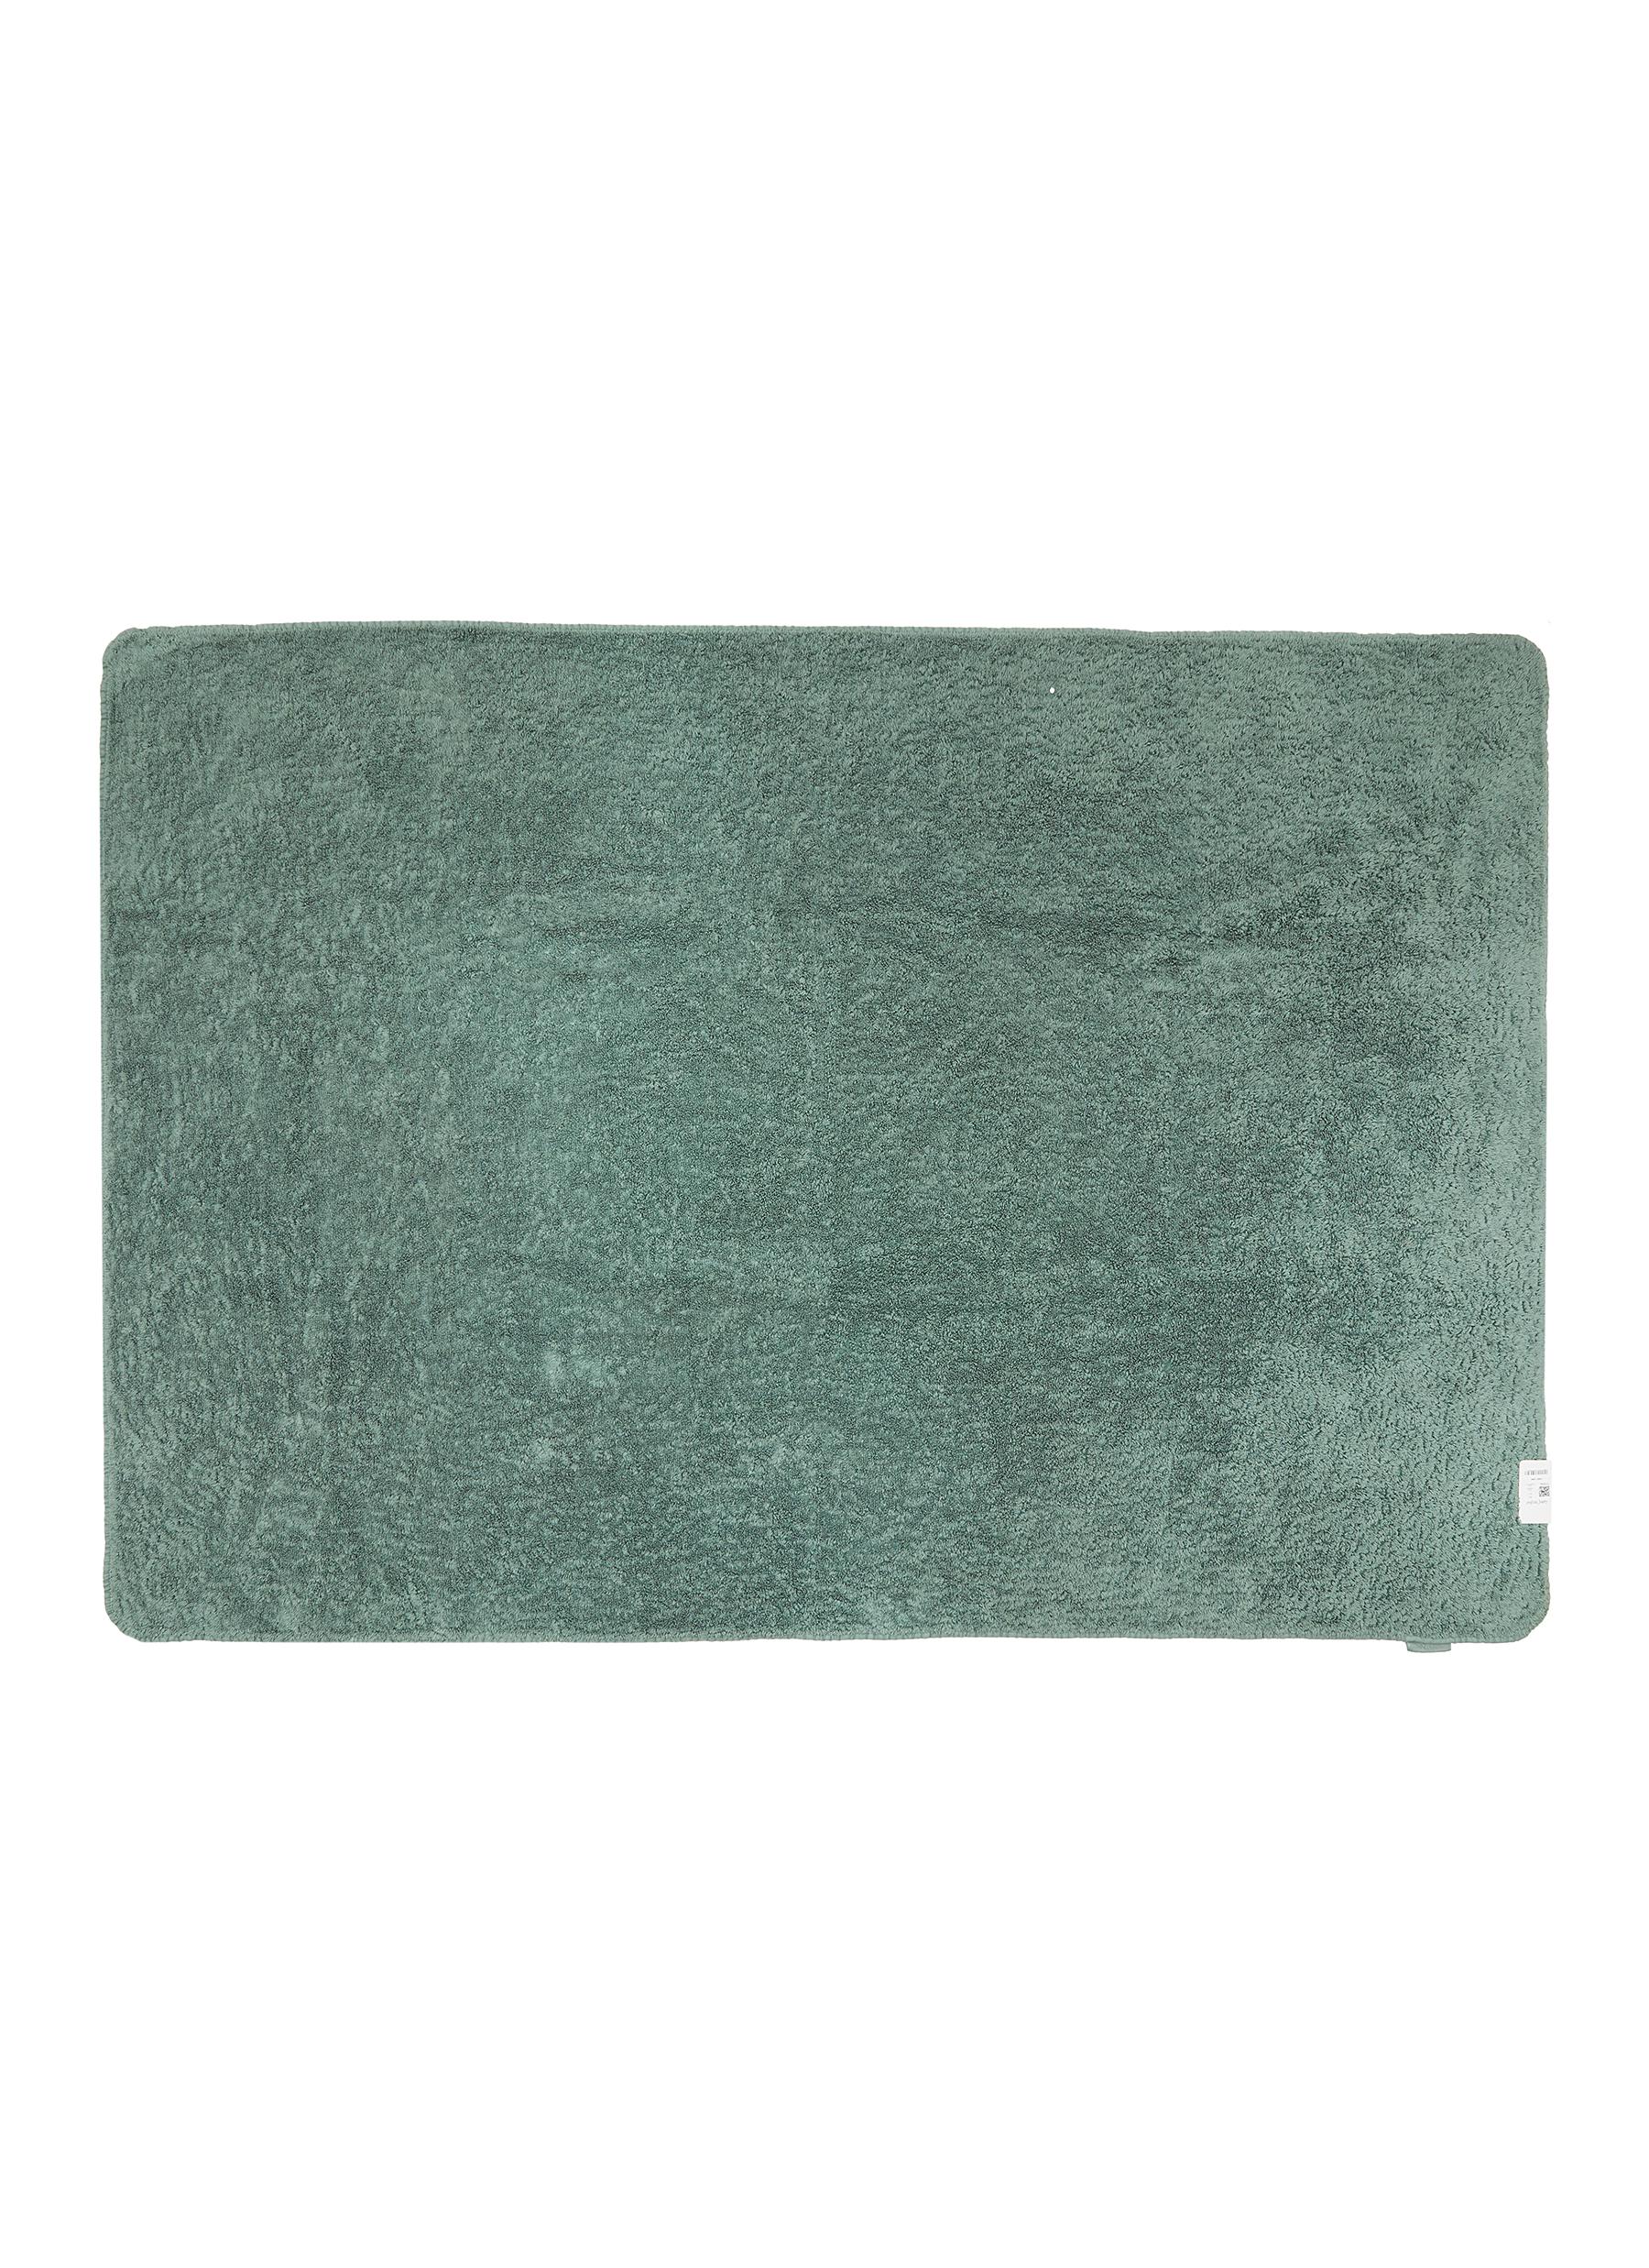 Abyss Super Pile Bath Sheet - Evergreen In Green